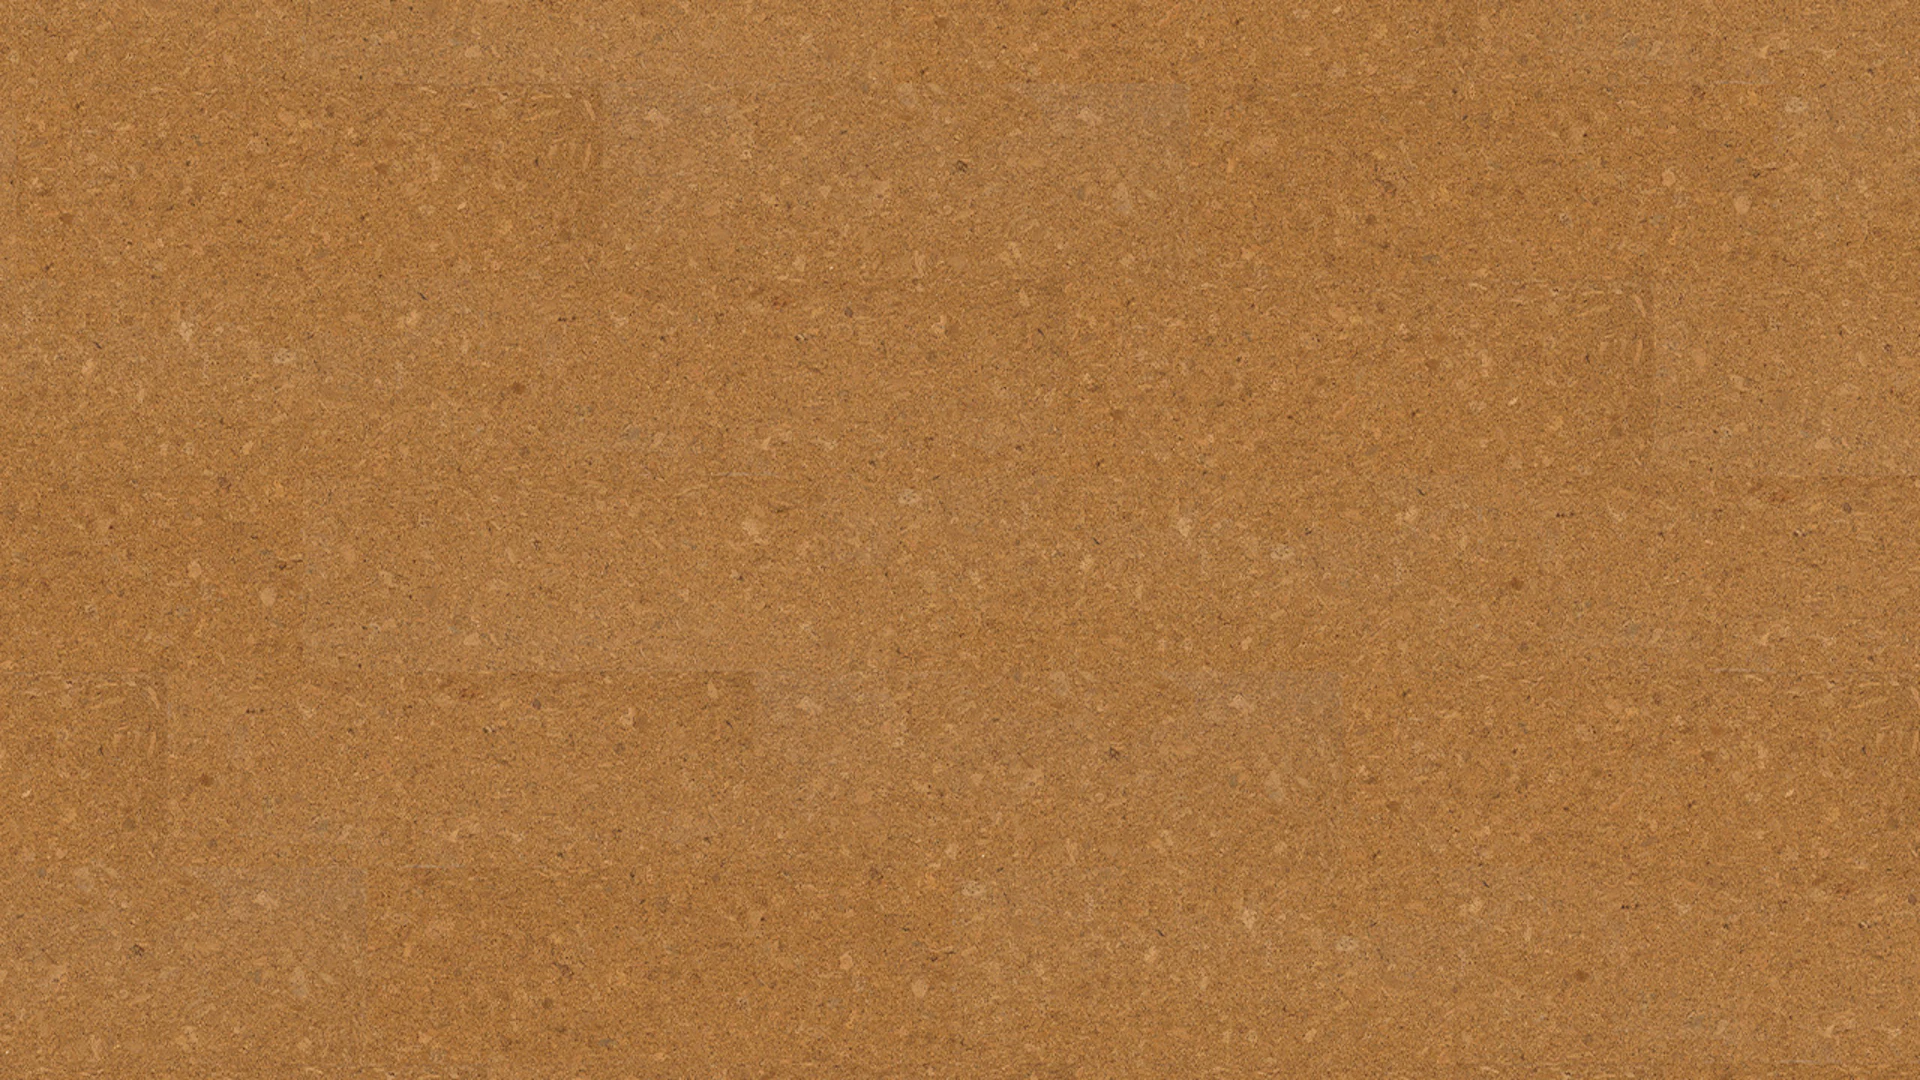 KWG click cork flooring - Morena Mondego natural solid